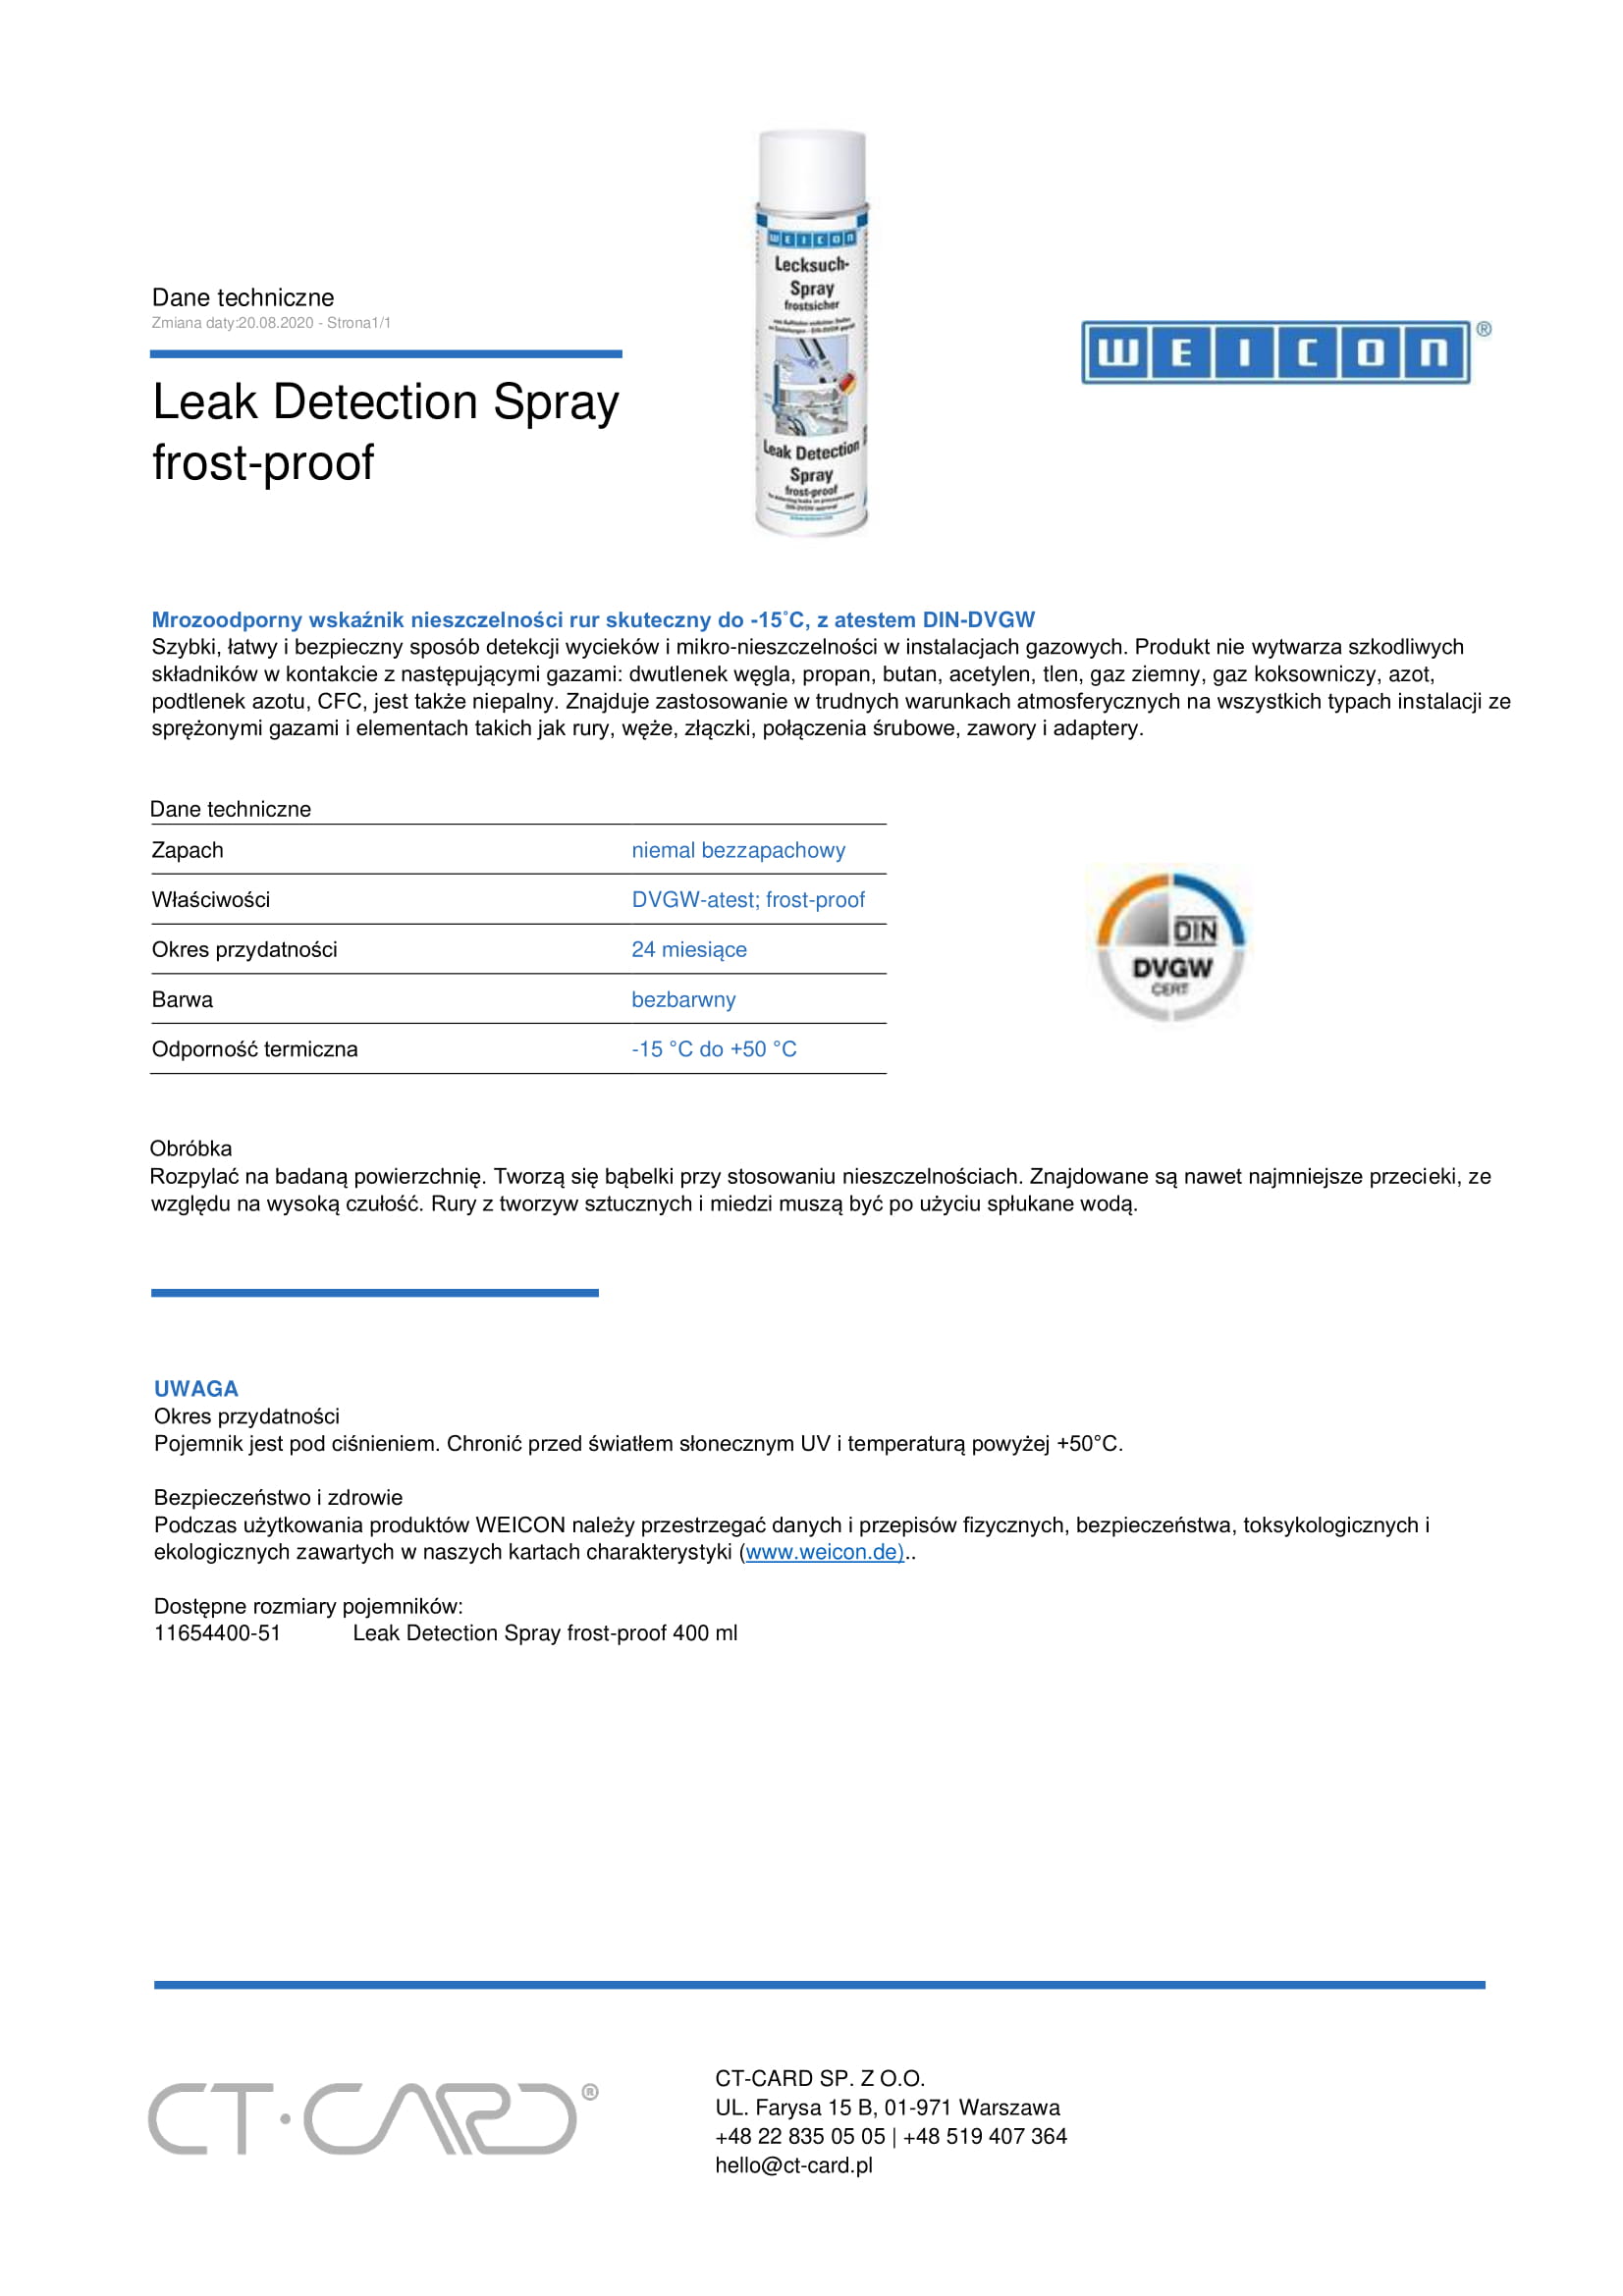 Leak Detection Spray frost-proof-1